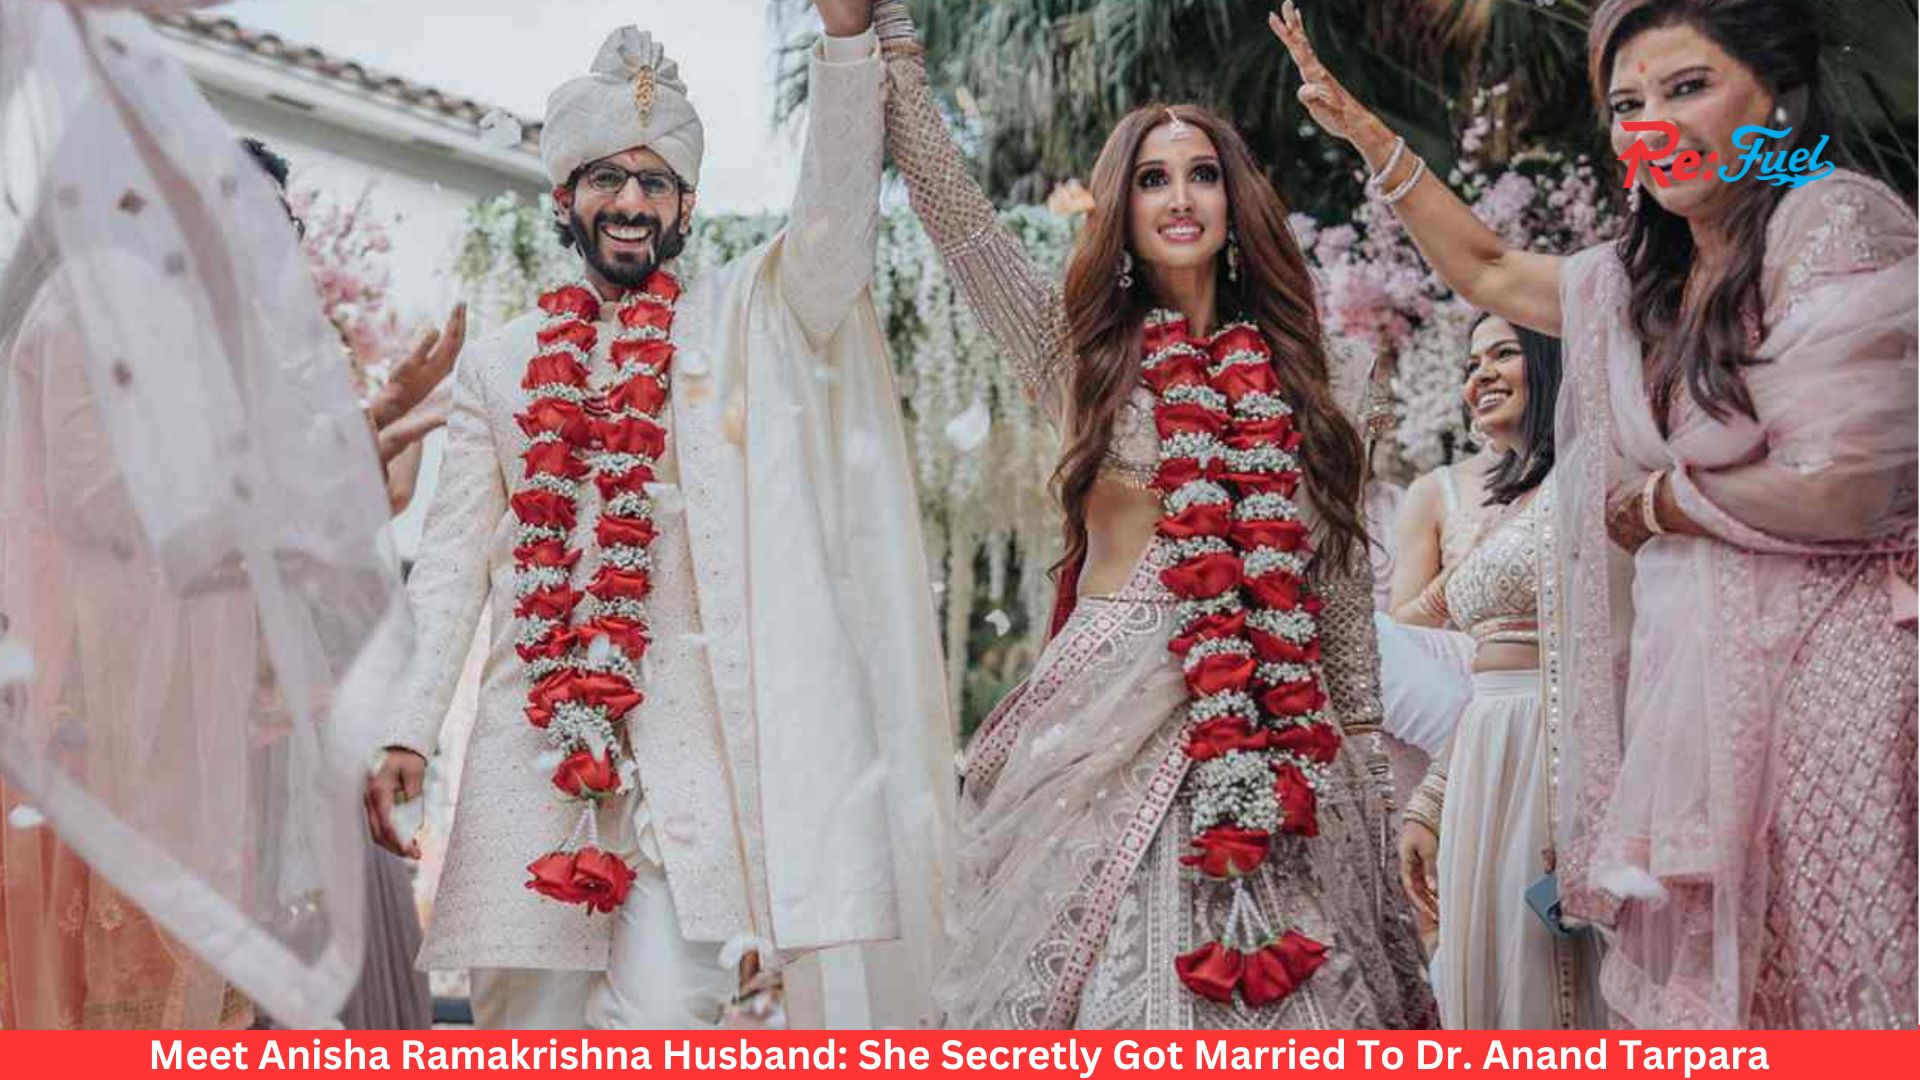 Meet Anisha Ramakrishna Husband: She Secretly Got Married To Dr. Anand Tarpara